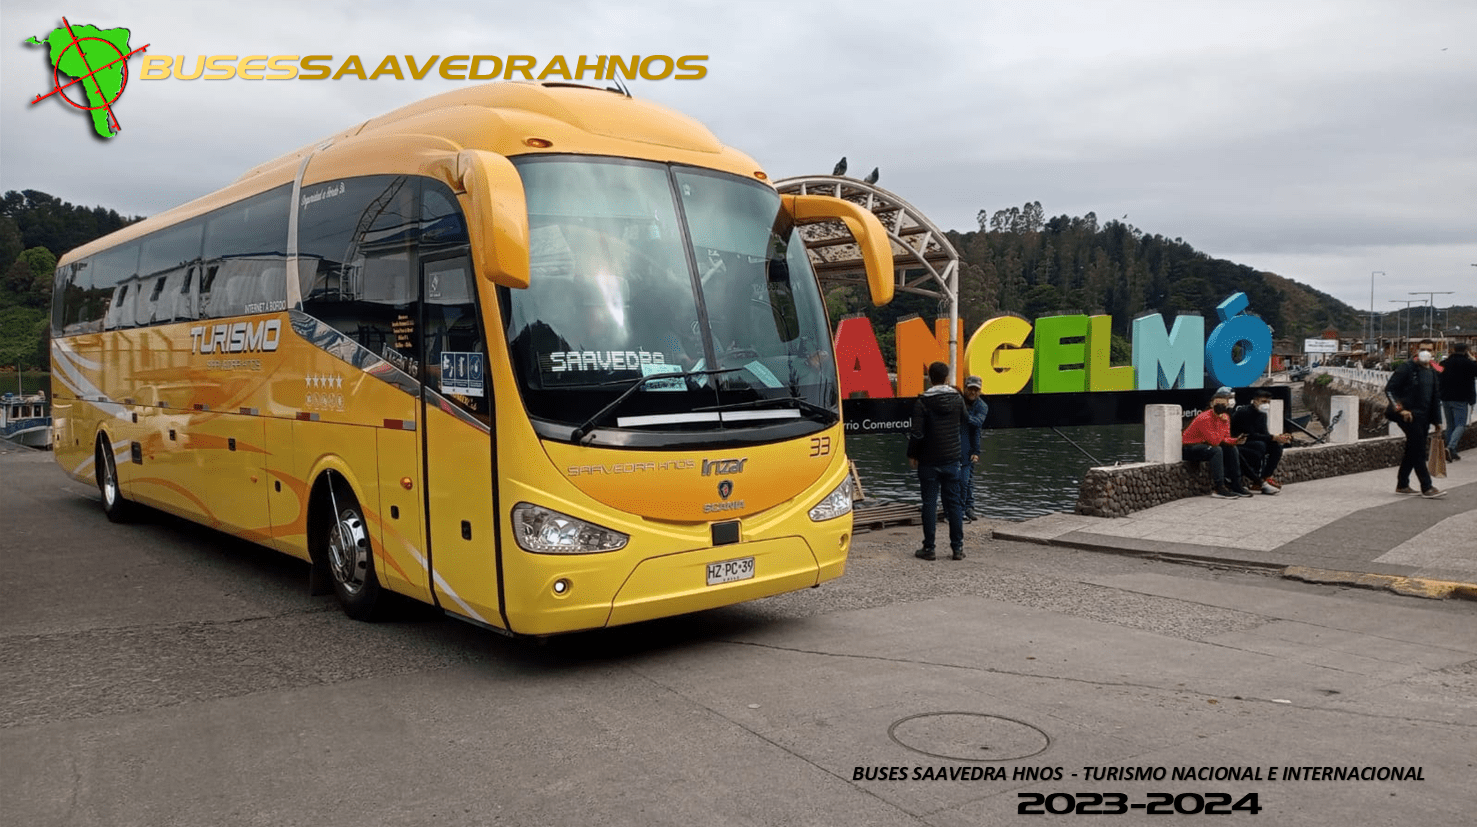 Buses Saavedra Hnos - Turismo - 13-min